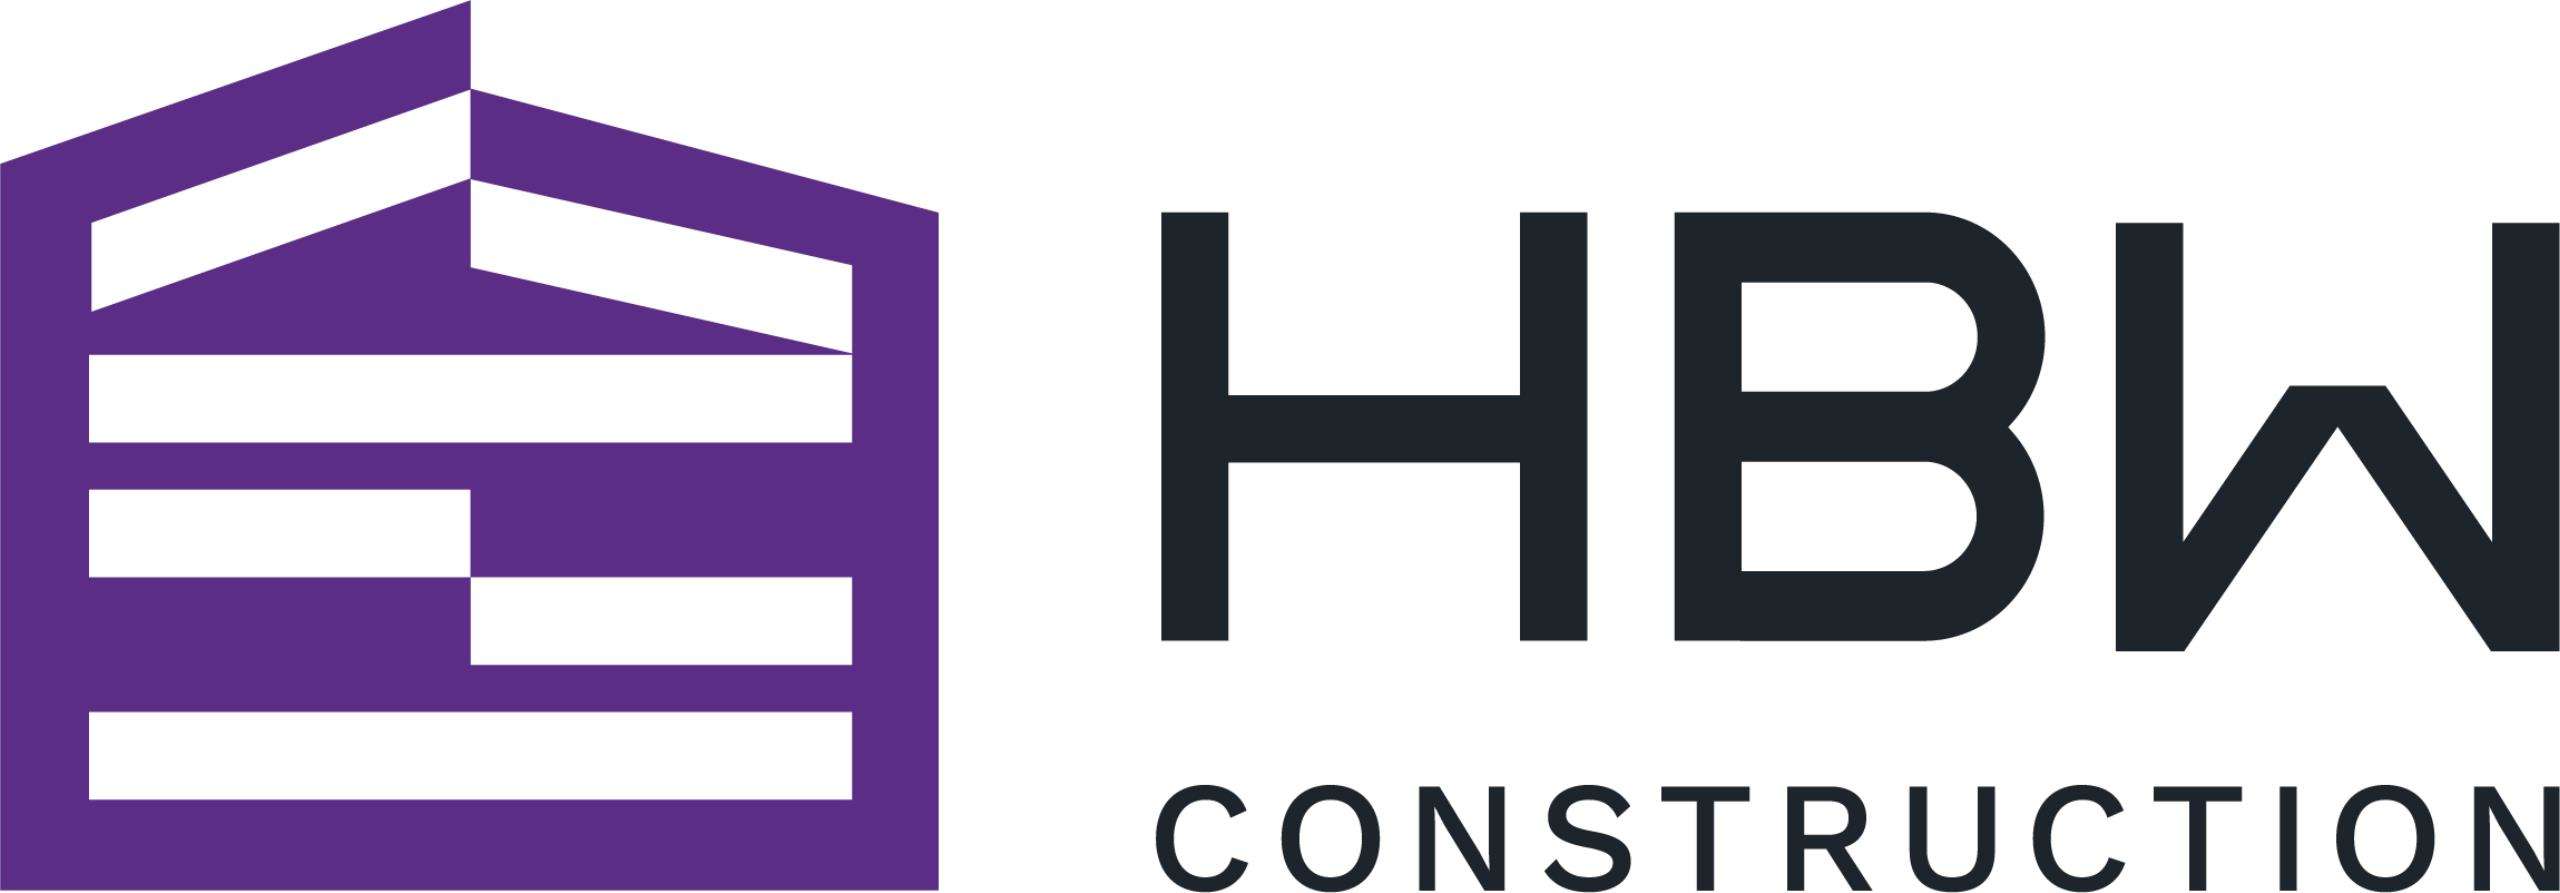 HBW Construction & Renovation Ltd. Logo